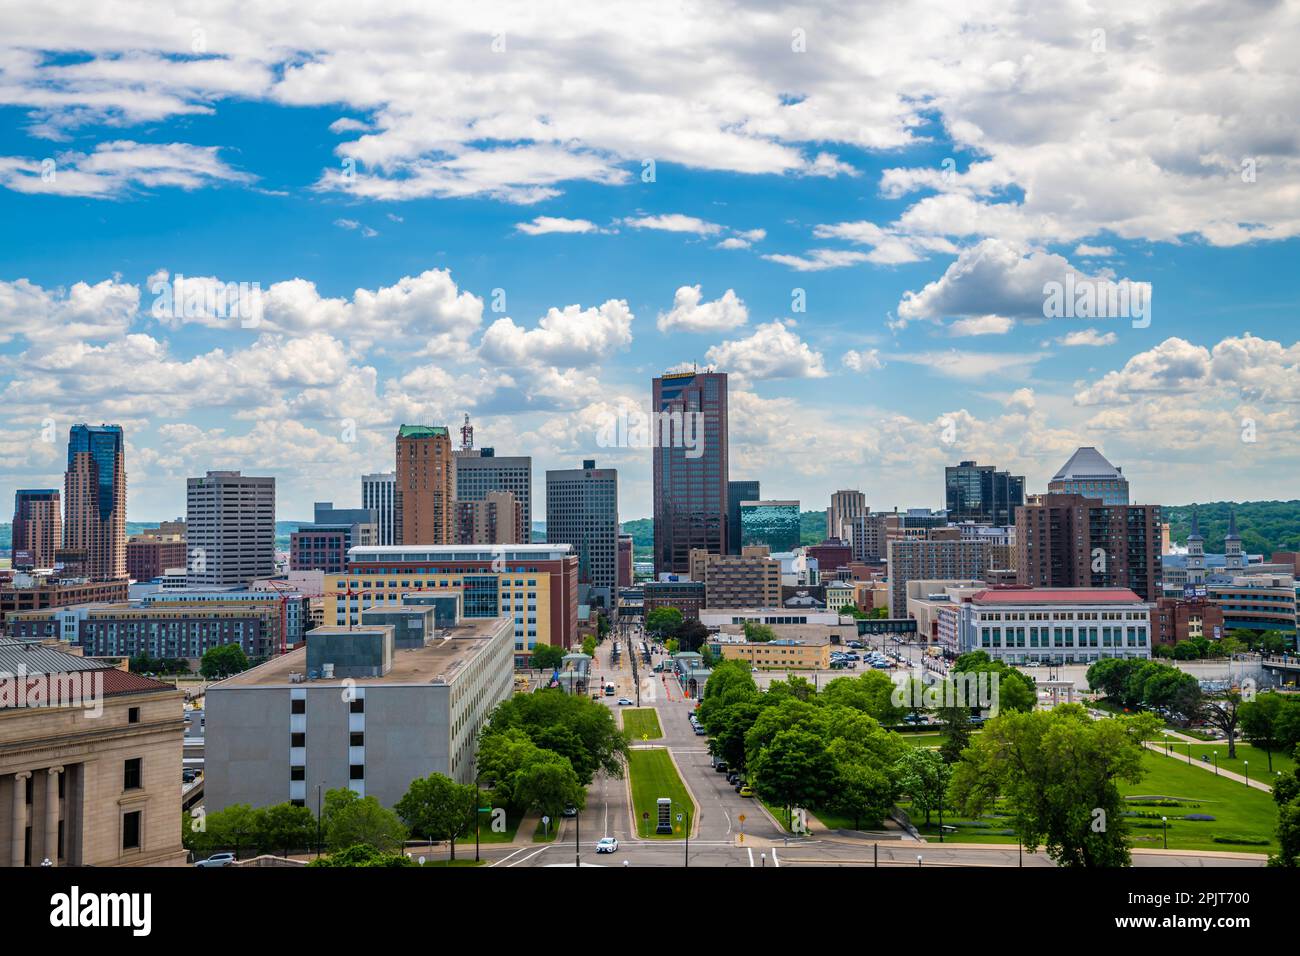 Minnesota, MN, USA - June 8, 2022: The huge outside preserve grounds of Minnesota State Capitol Stock Photo